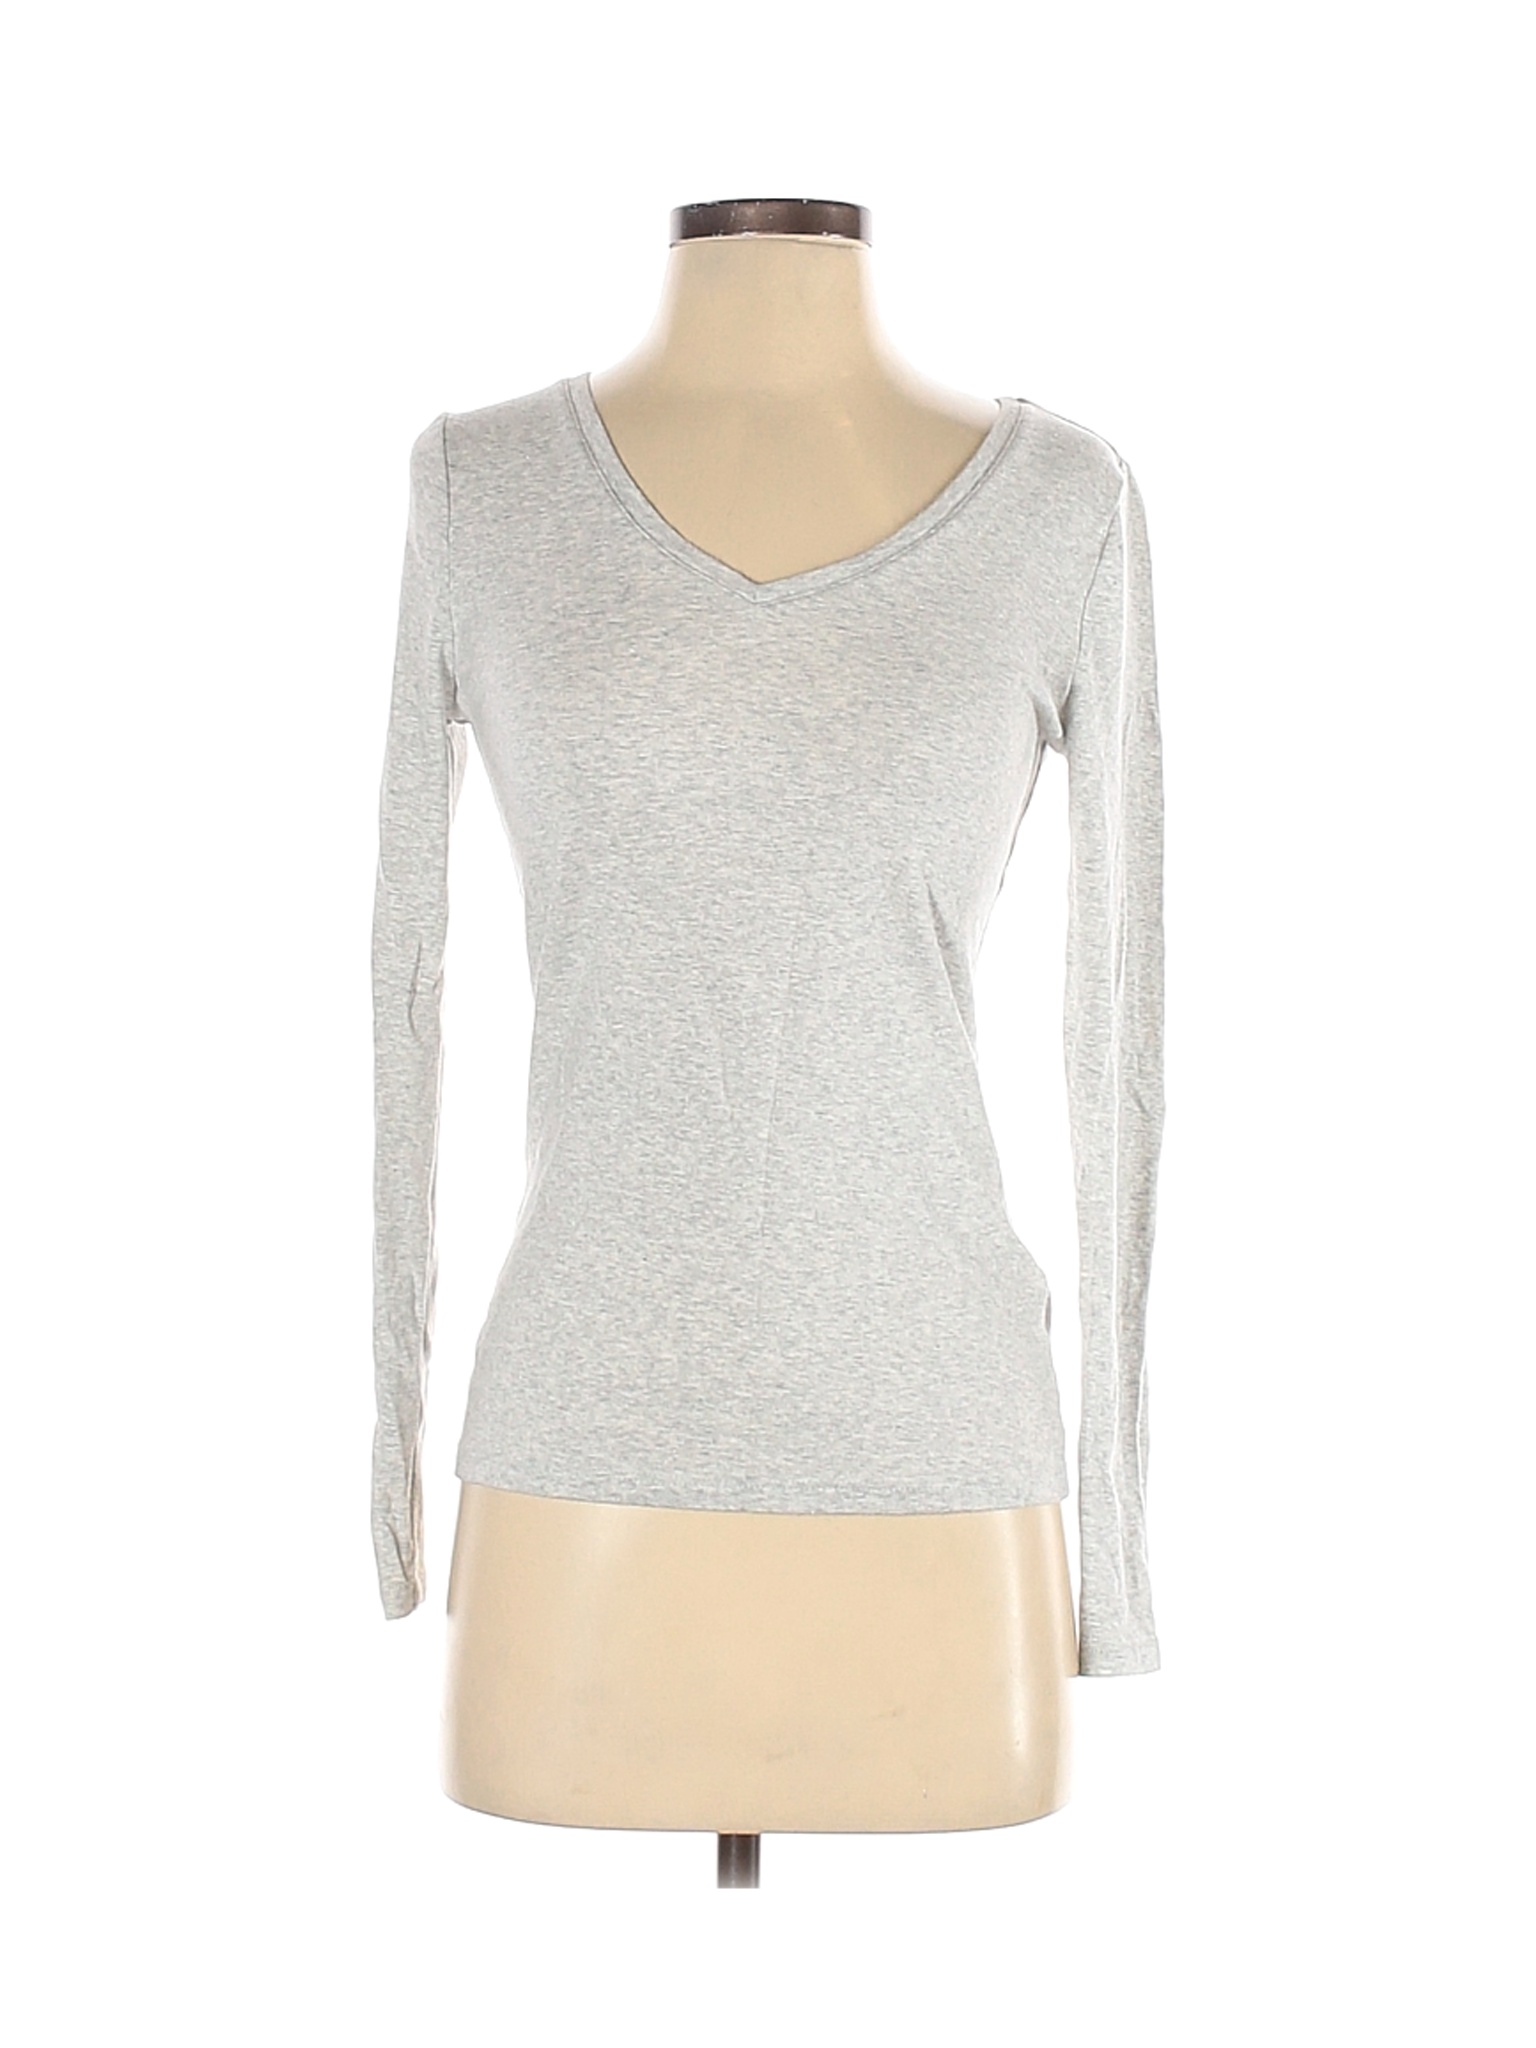 A New Day Women Gray Long Sleeve T-Shirt S | eBay